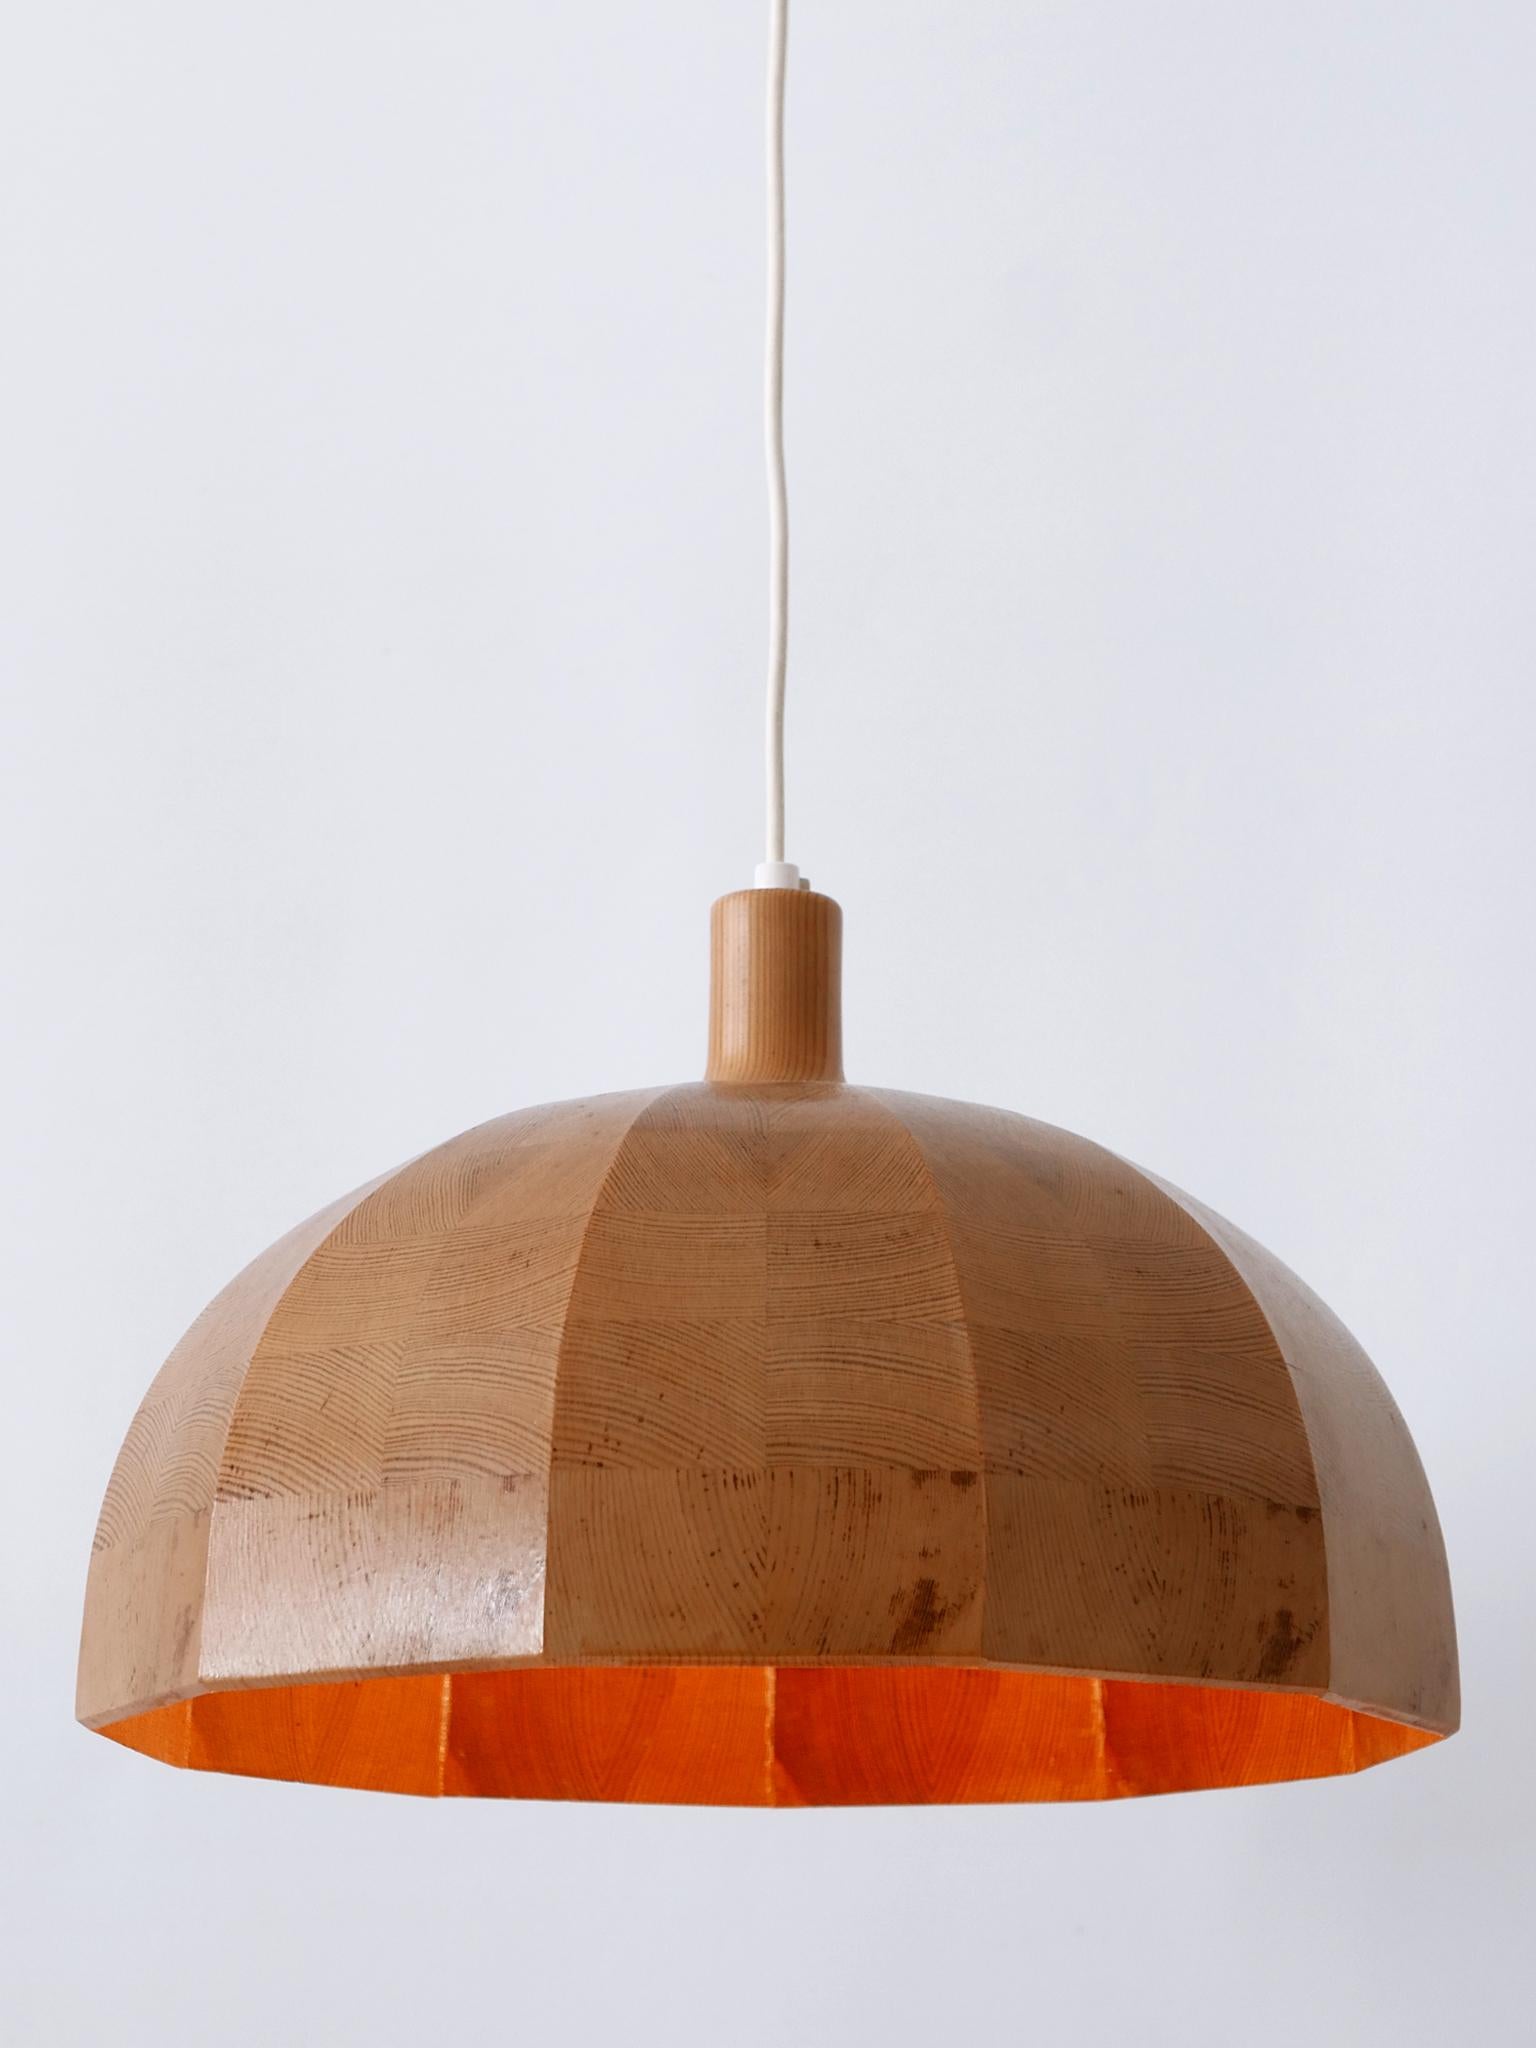 Rare Mid-Century Modern Pine Wood Pendant Lamp or Hanging Light Sweden, 1960s For Sale 5